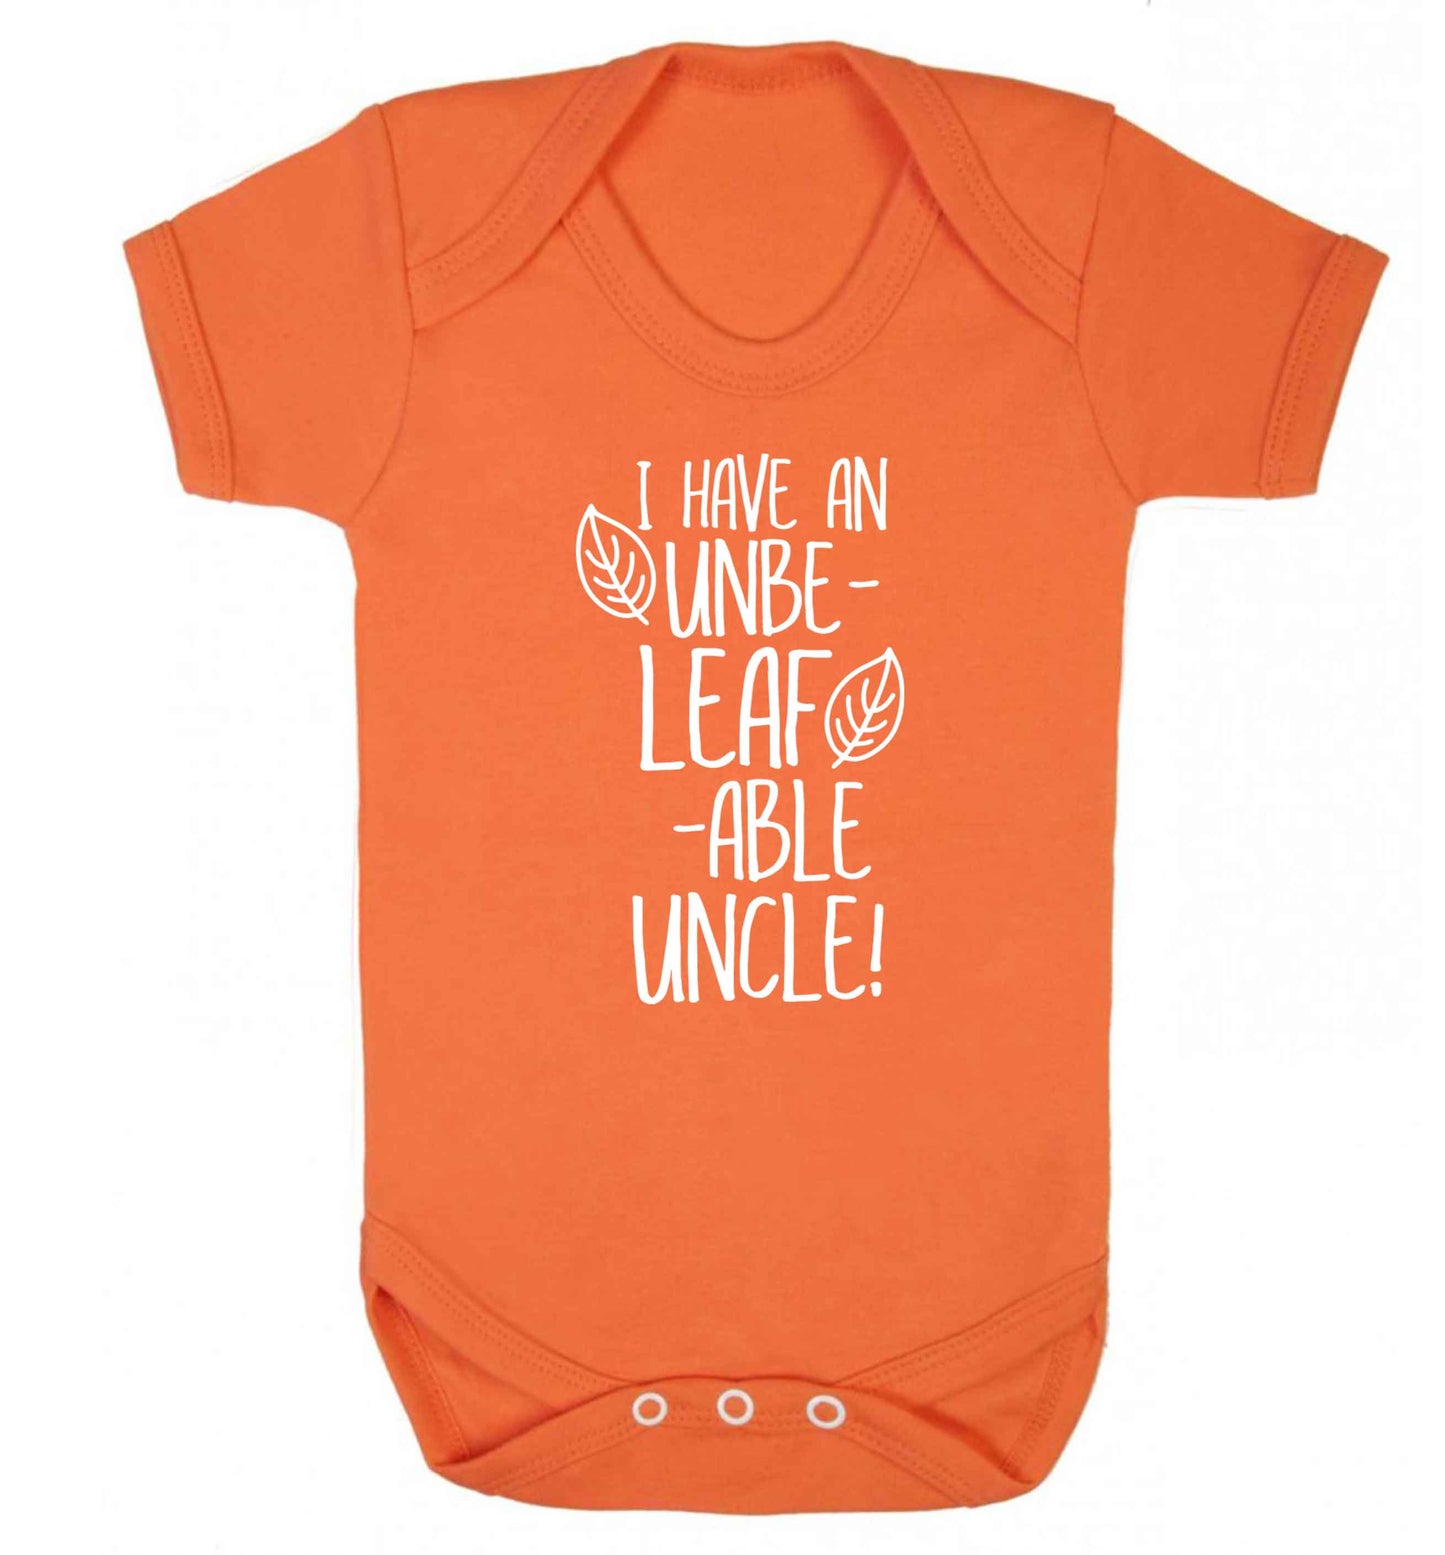 I have an unbe-leaf-able uncle Baby Vest orange 18-24 months